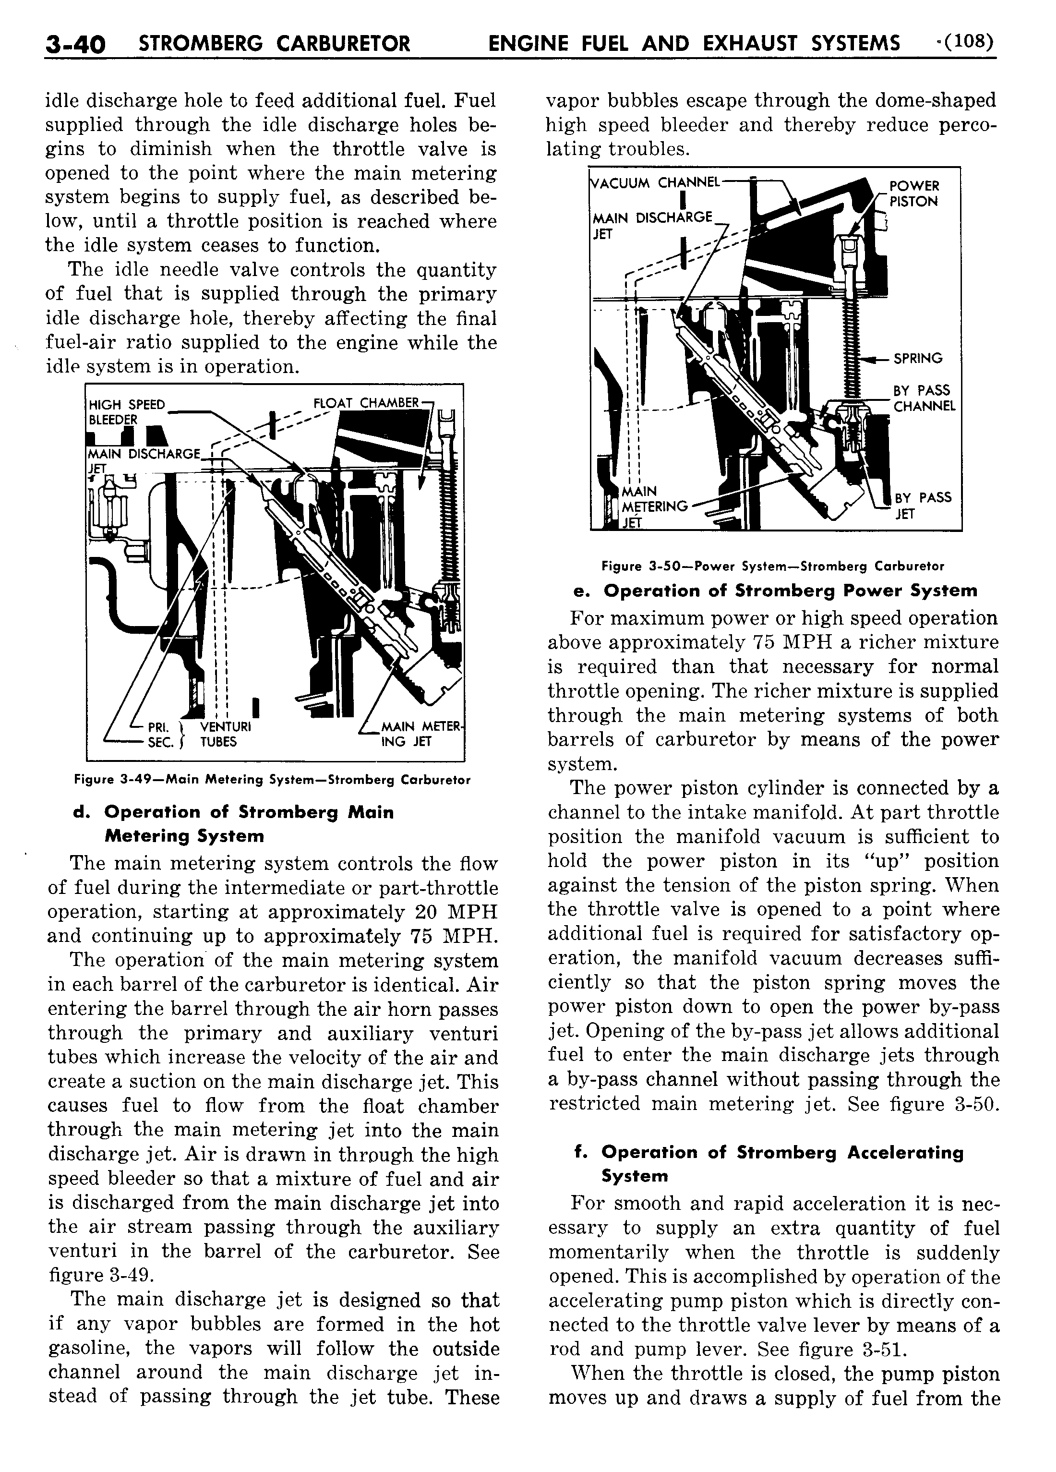 n_04 1951 Buick Shop Manual - Engine Fuel & Exhaust-040-040.jpg